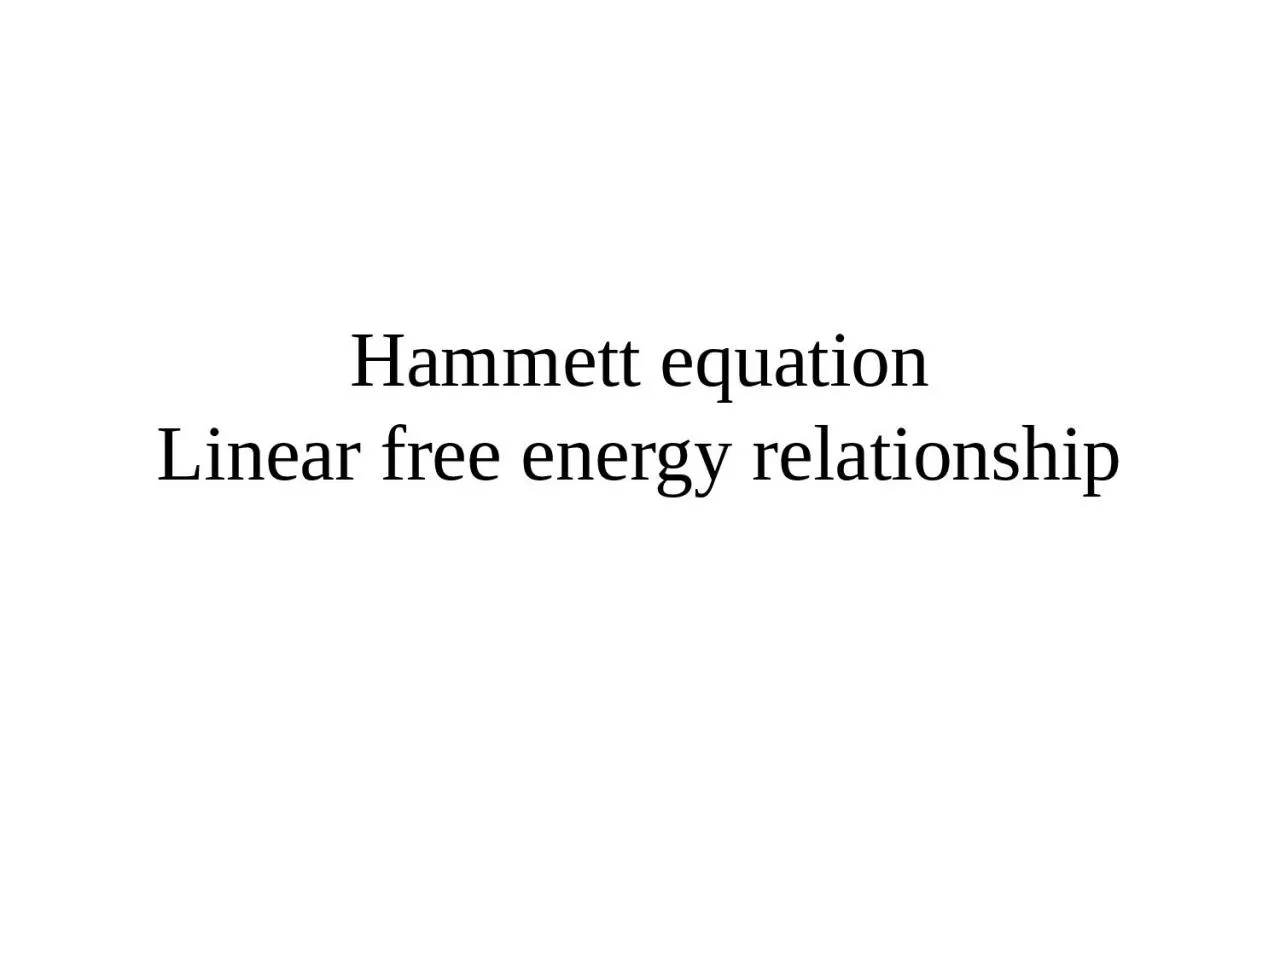 Hammett equation Linear free energy relationship